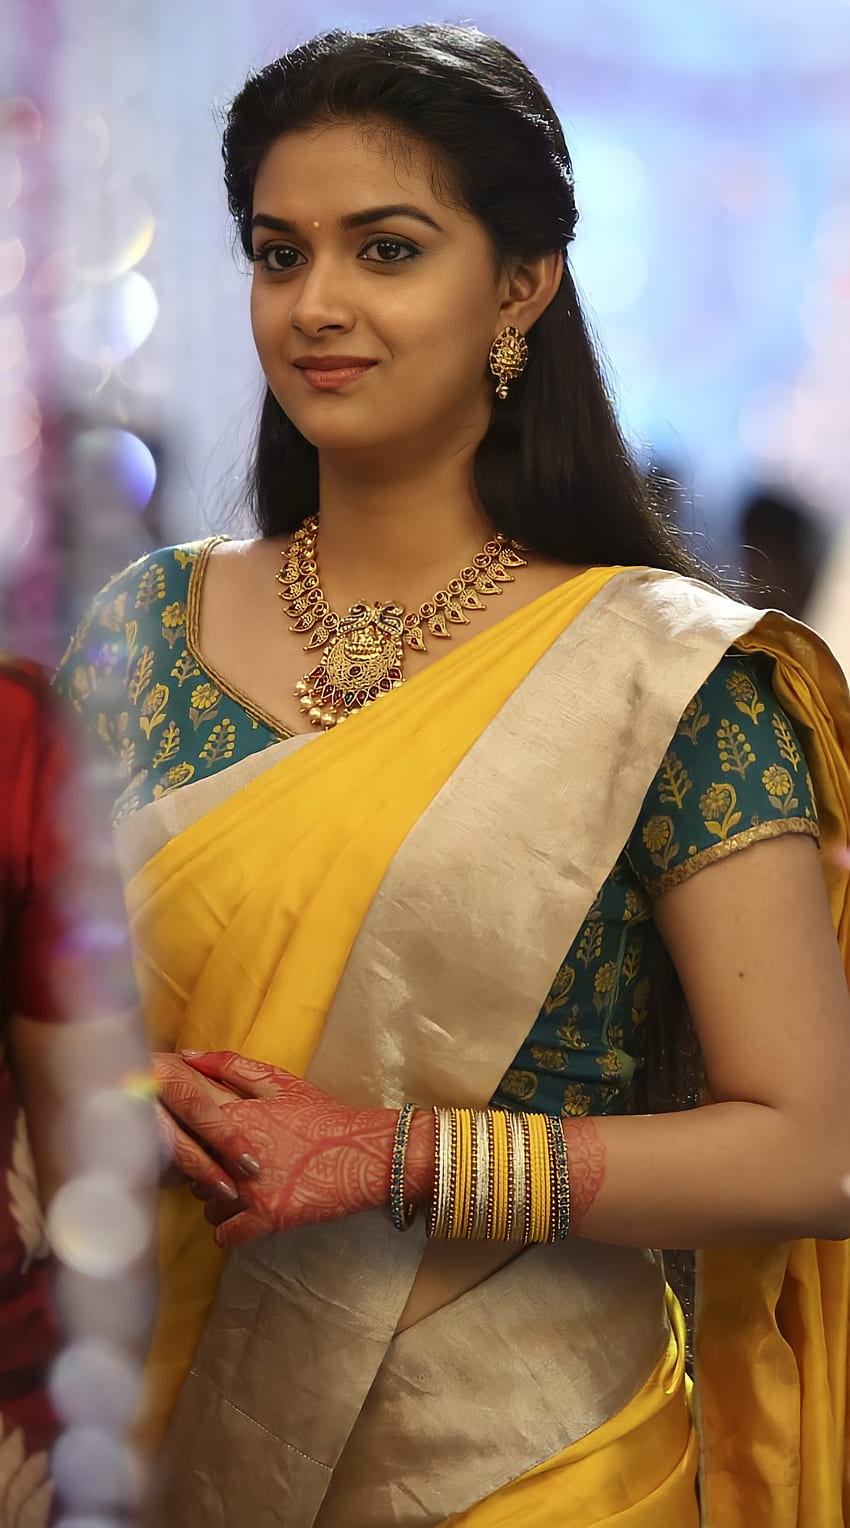 Keerthi Suresh, bhairava1, atriz2 Papel de parede de celular HD